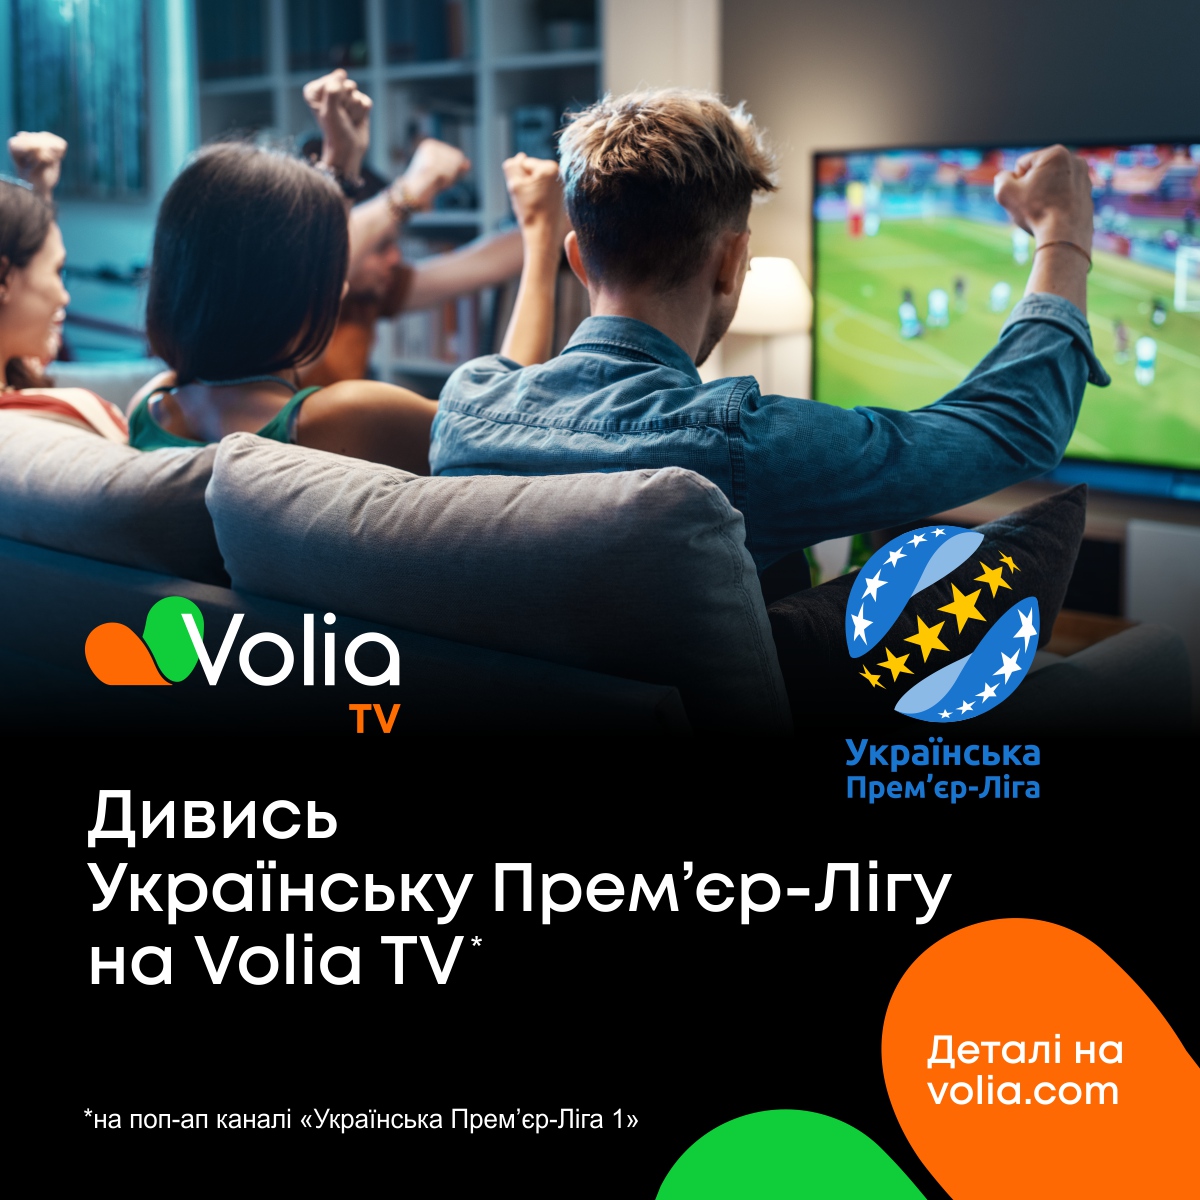 Volia agrees deal to broadast Ukrainian Premier League football